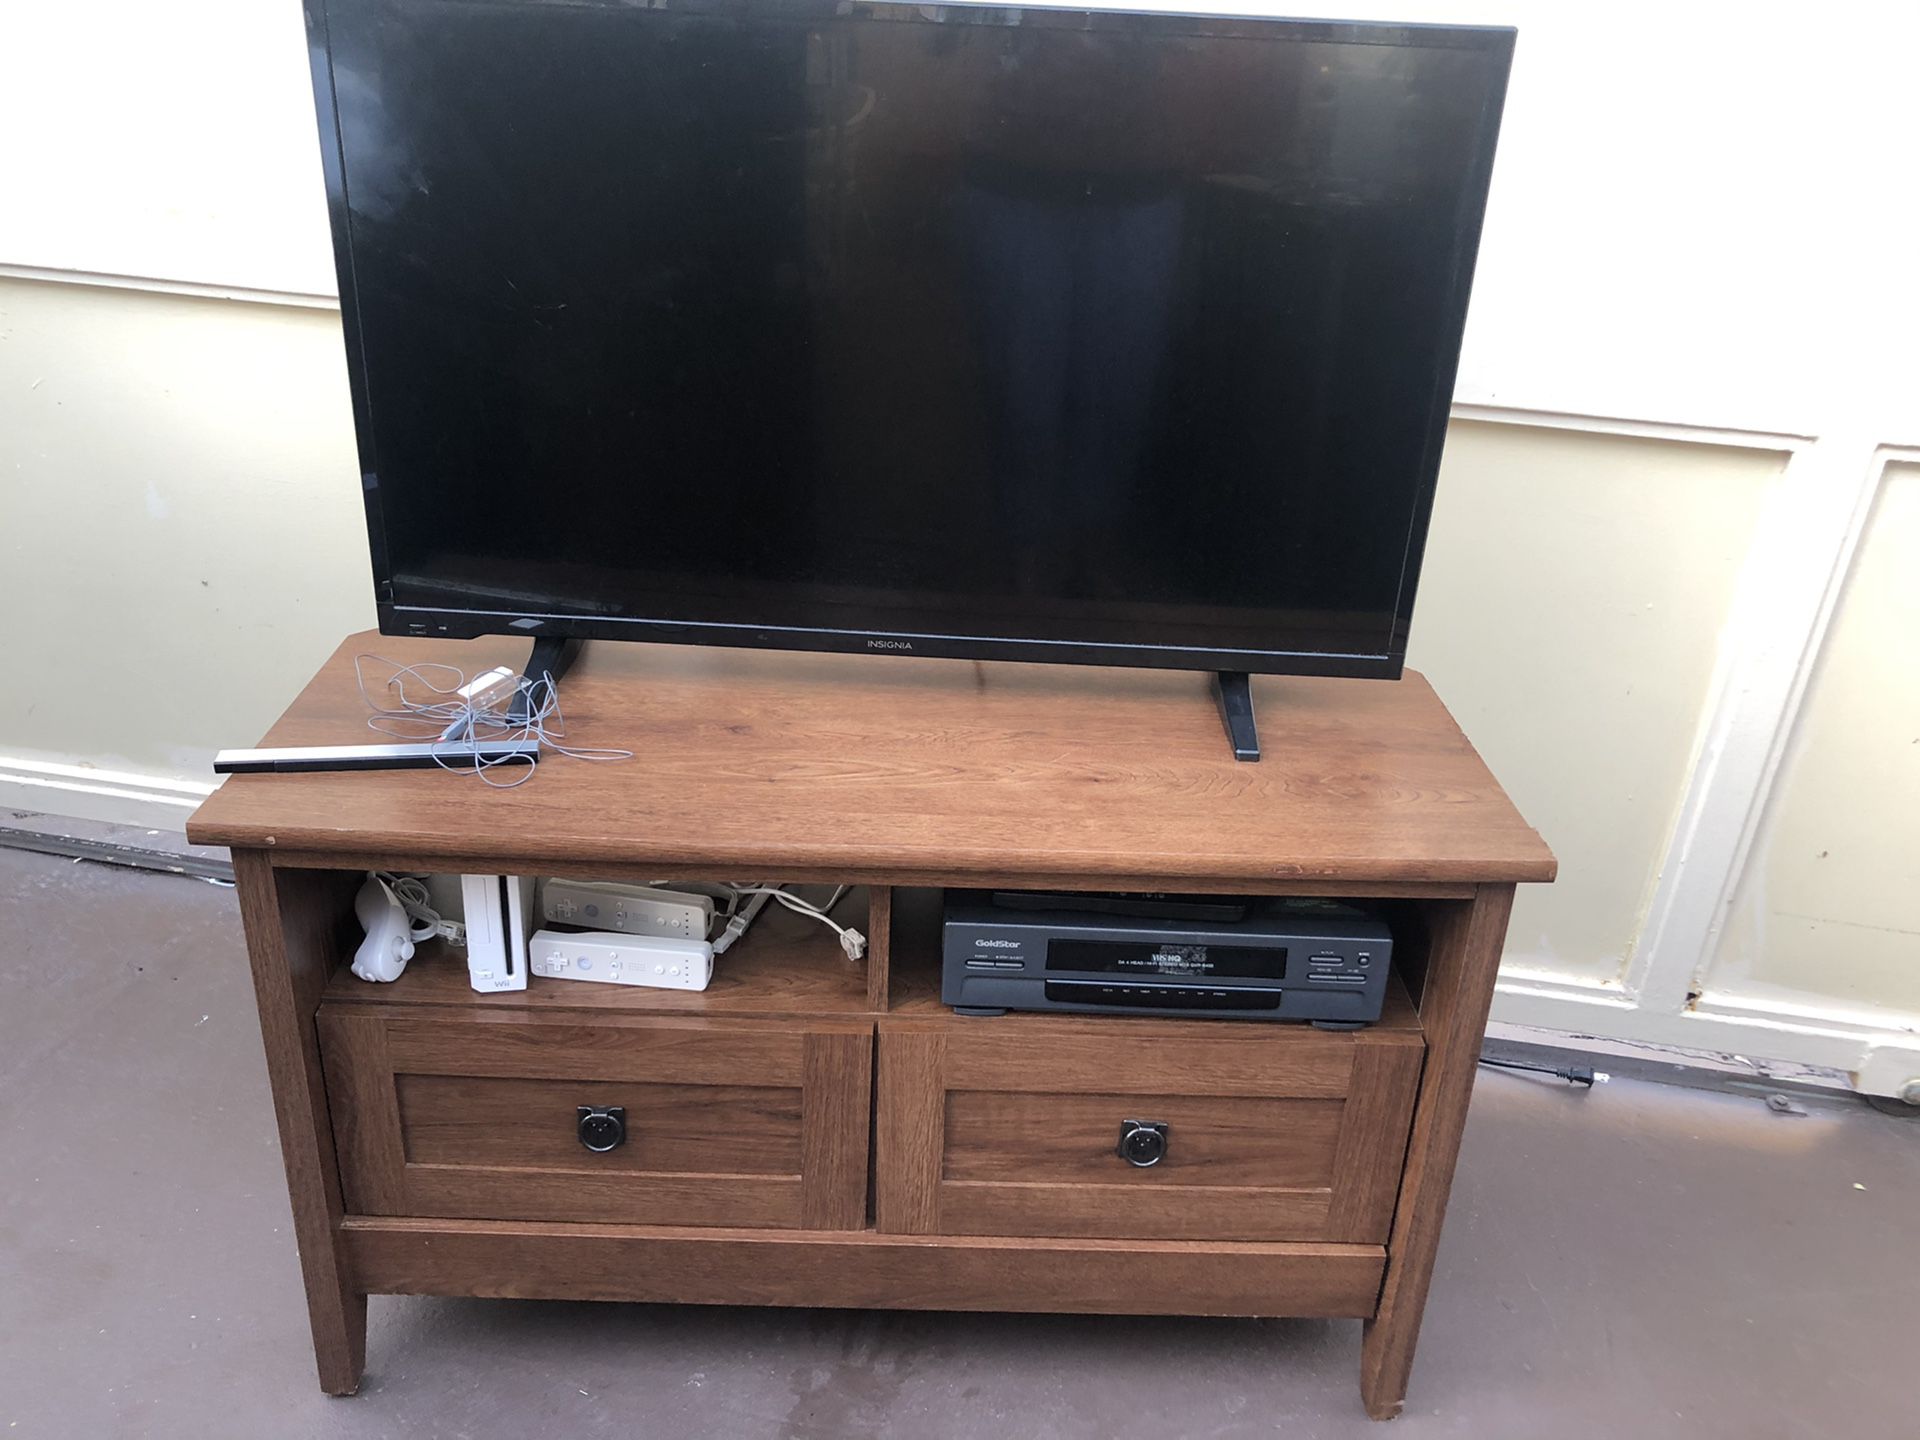 Very nice small TV stand